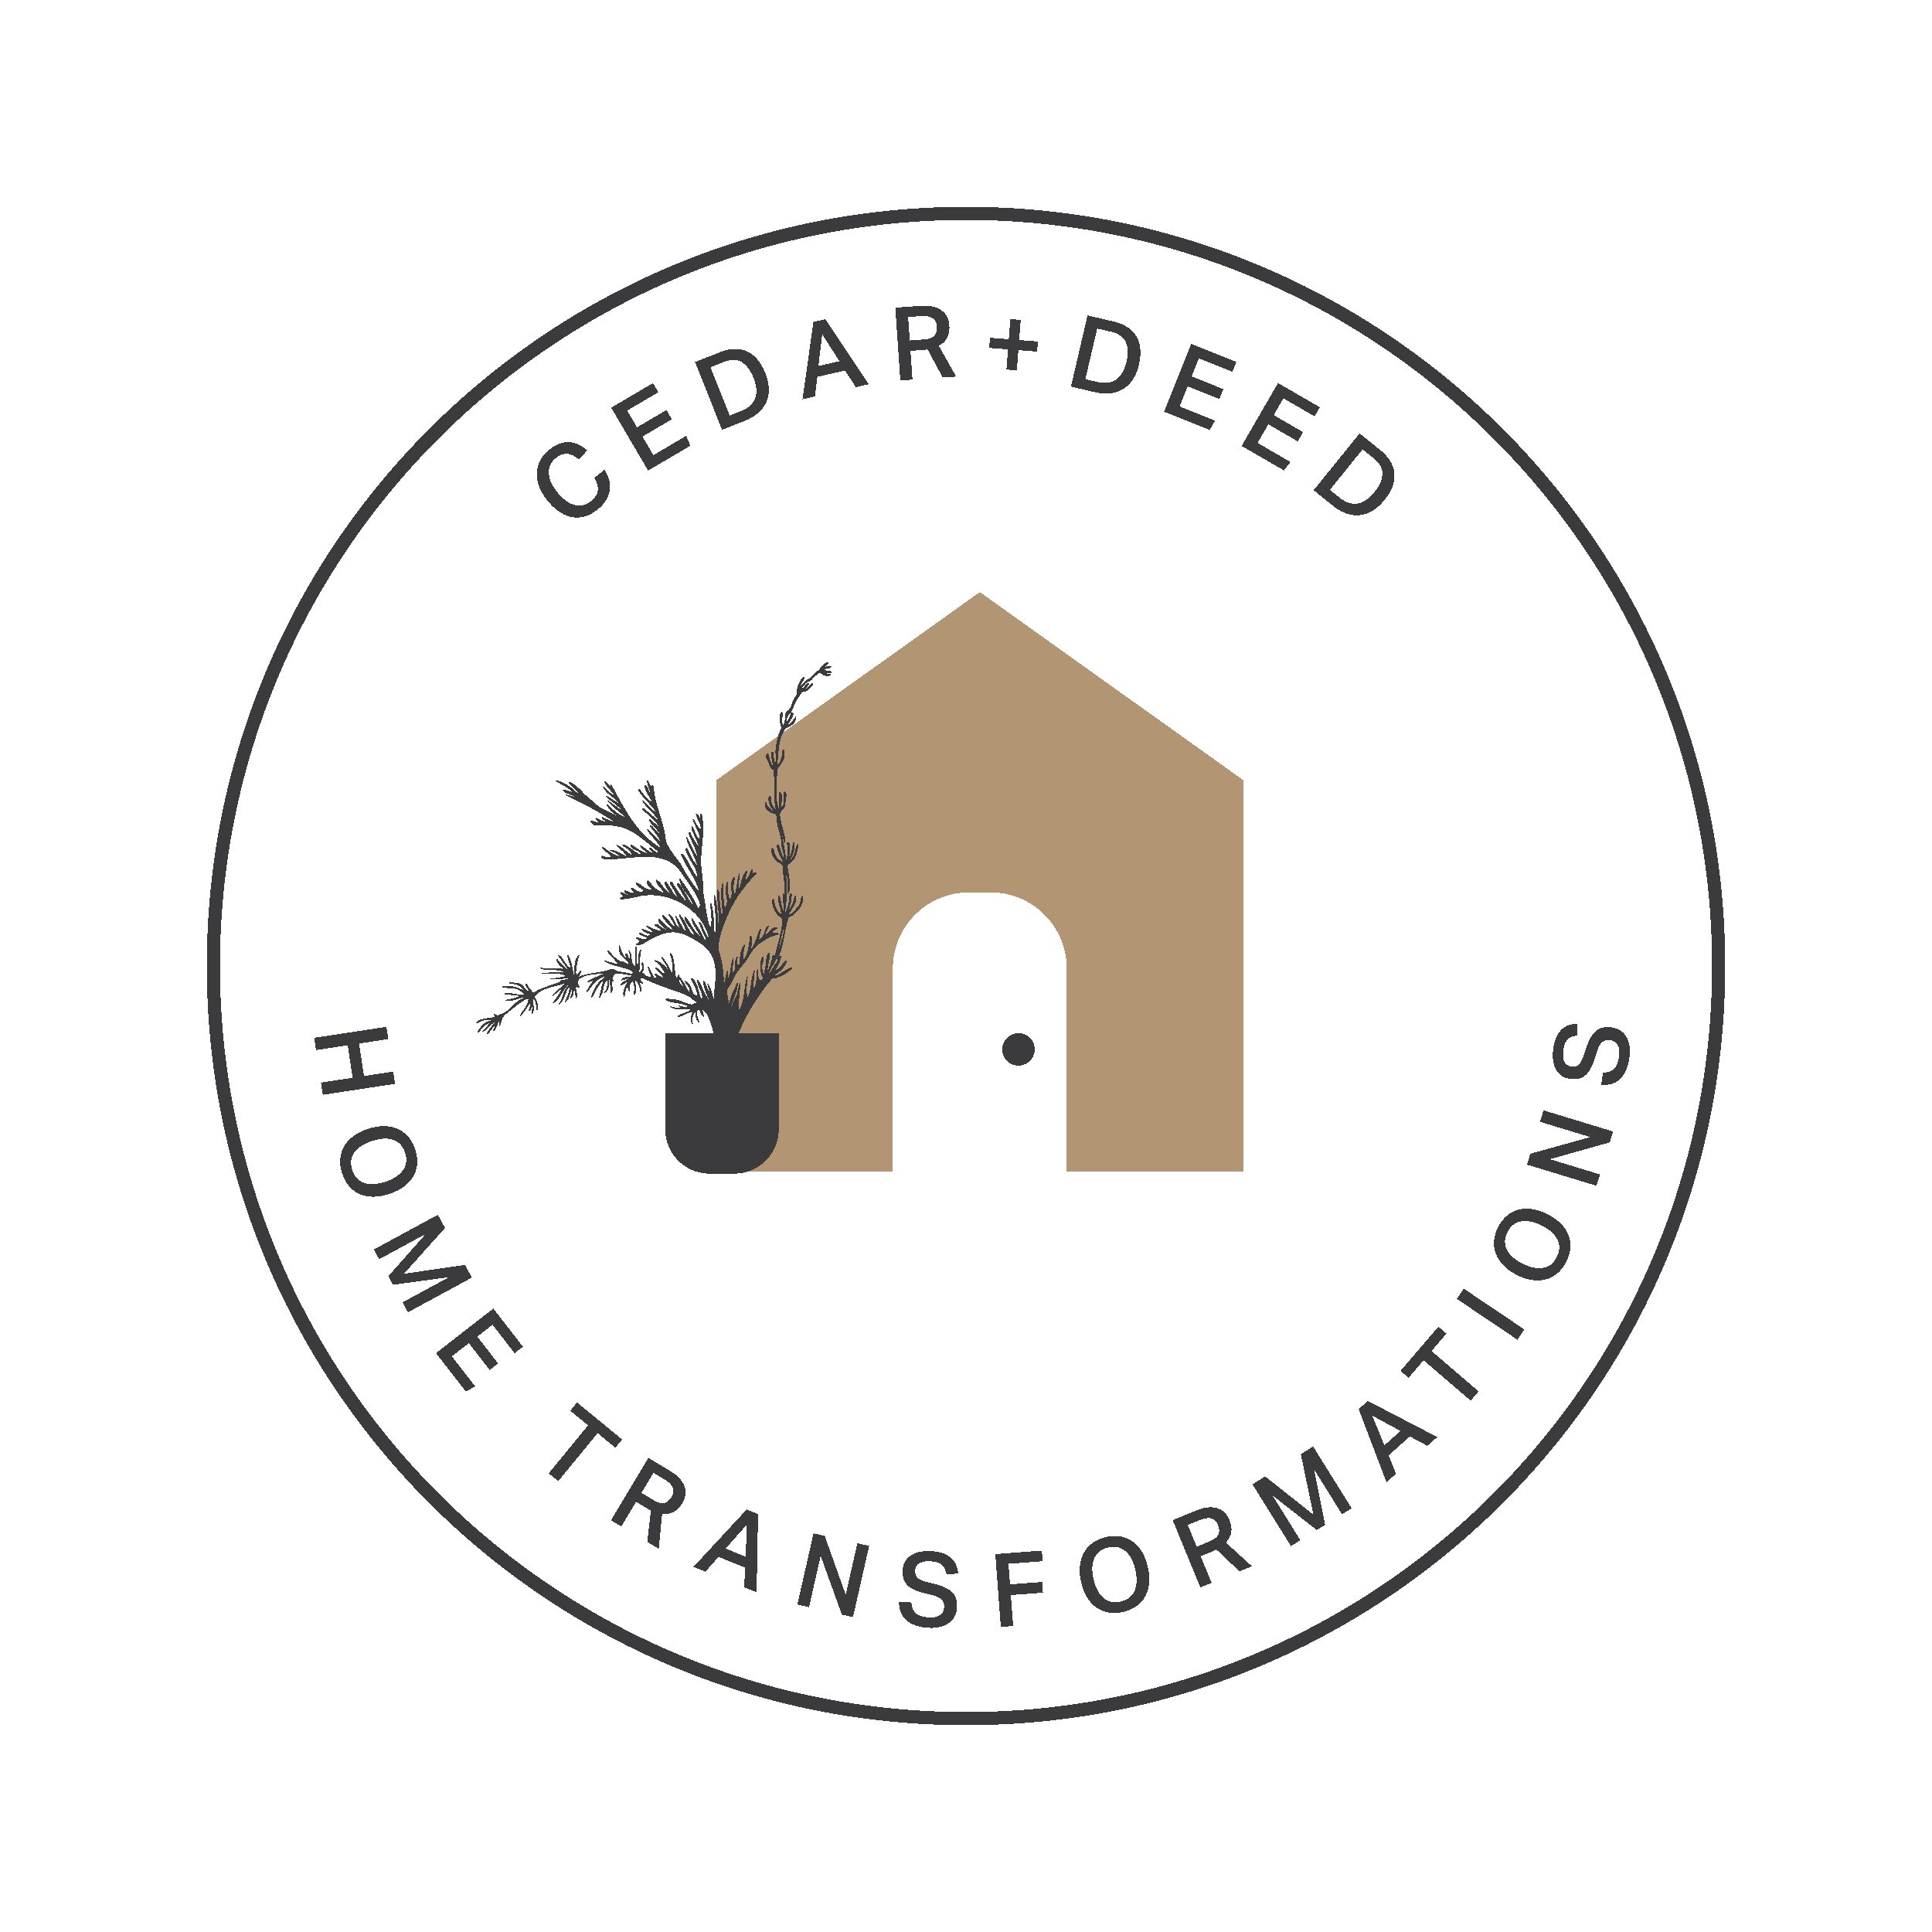 Cedar+Deed_Logo_Circle_WhiteBG (1)